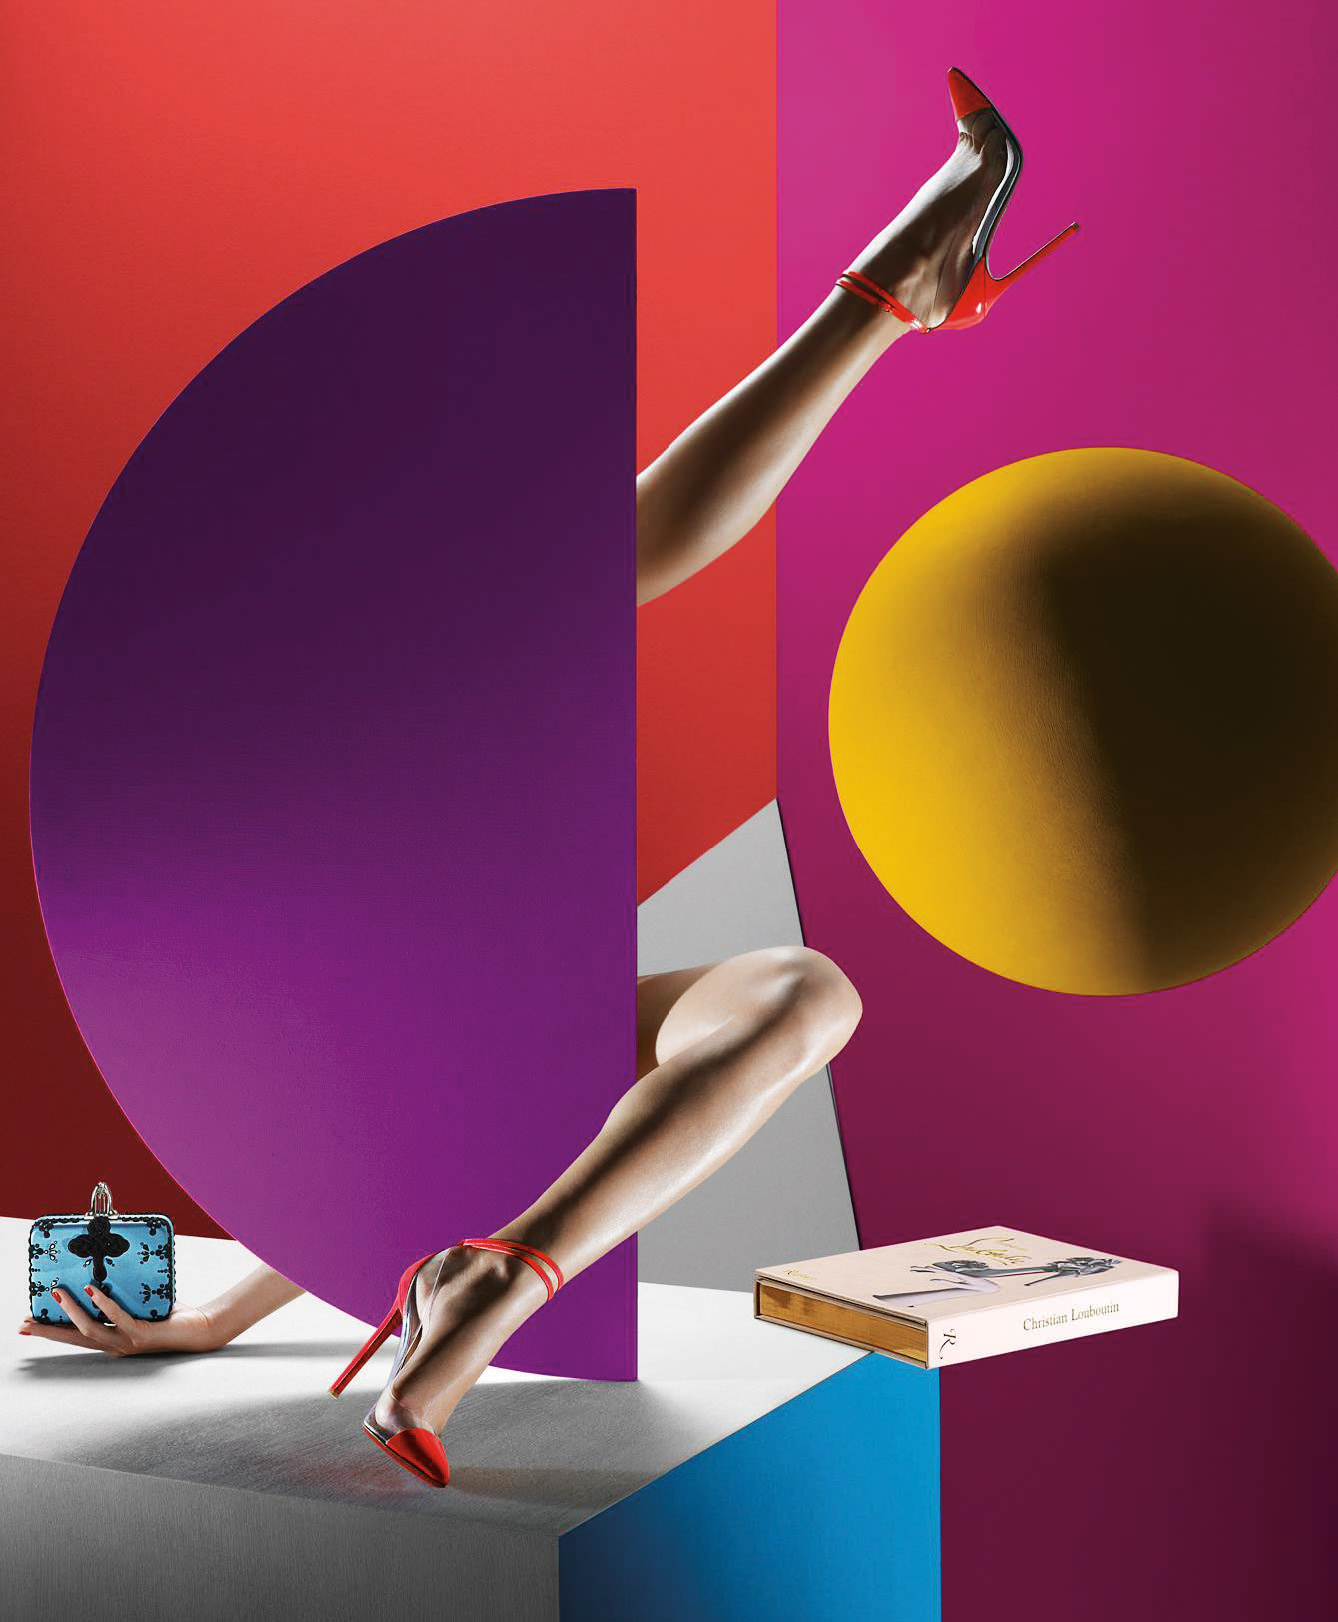 NUVO Magazine: Christian Louboutin at London's Design Museum